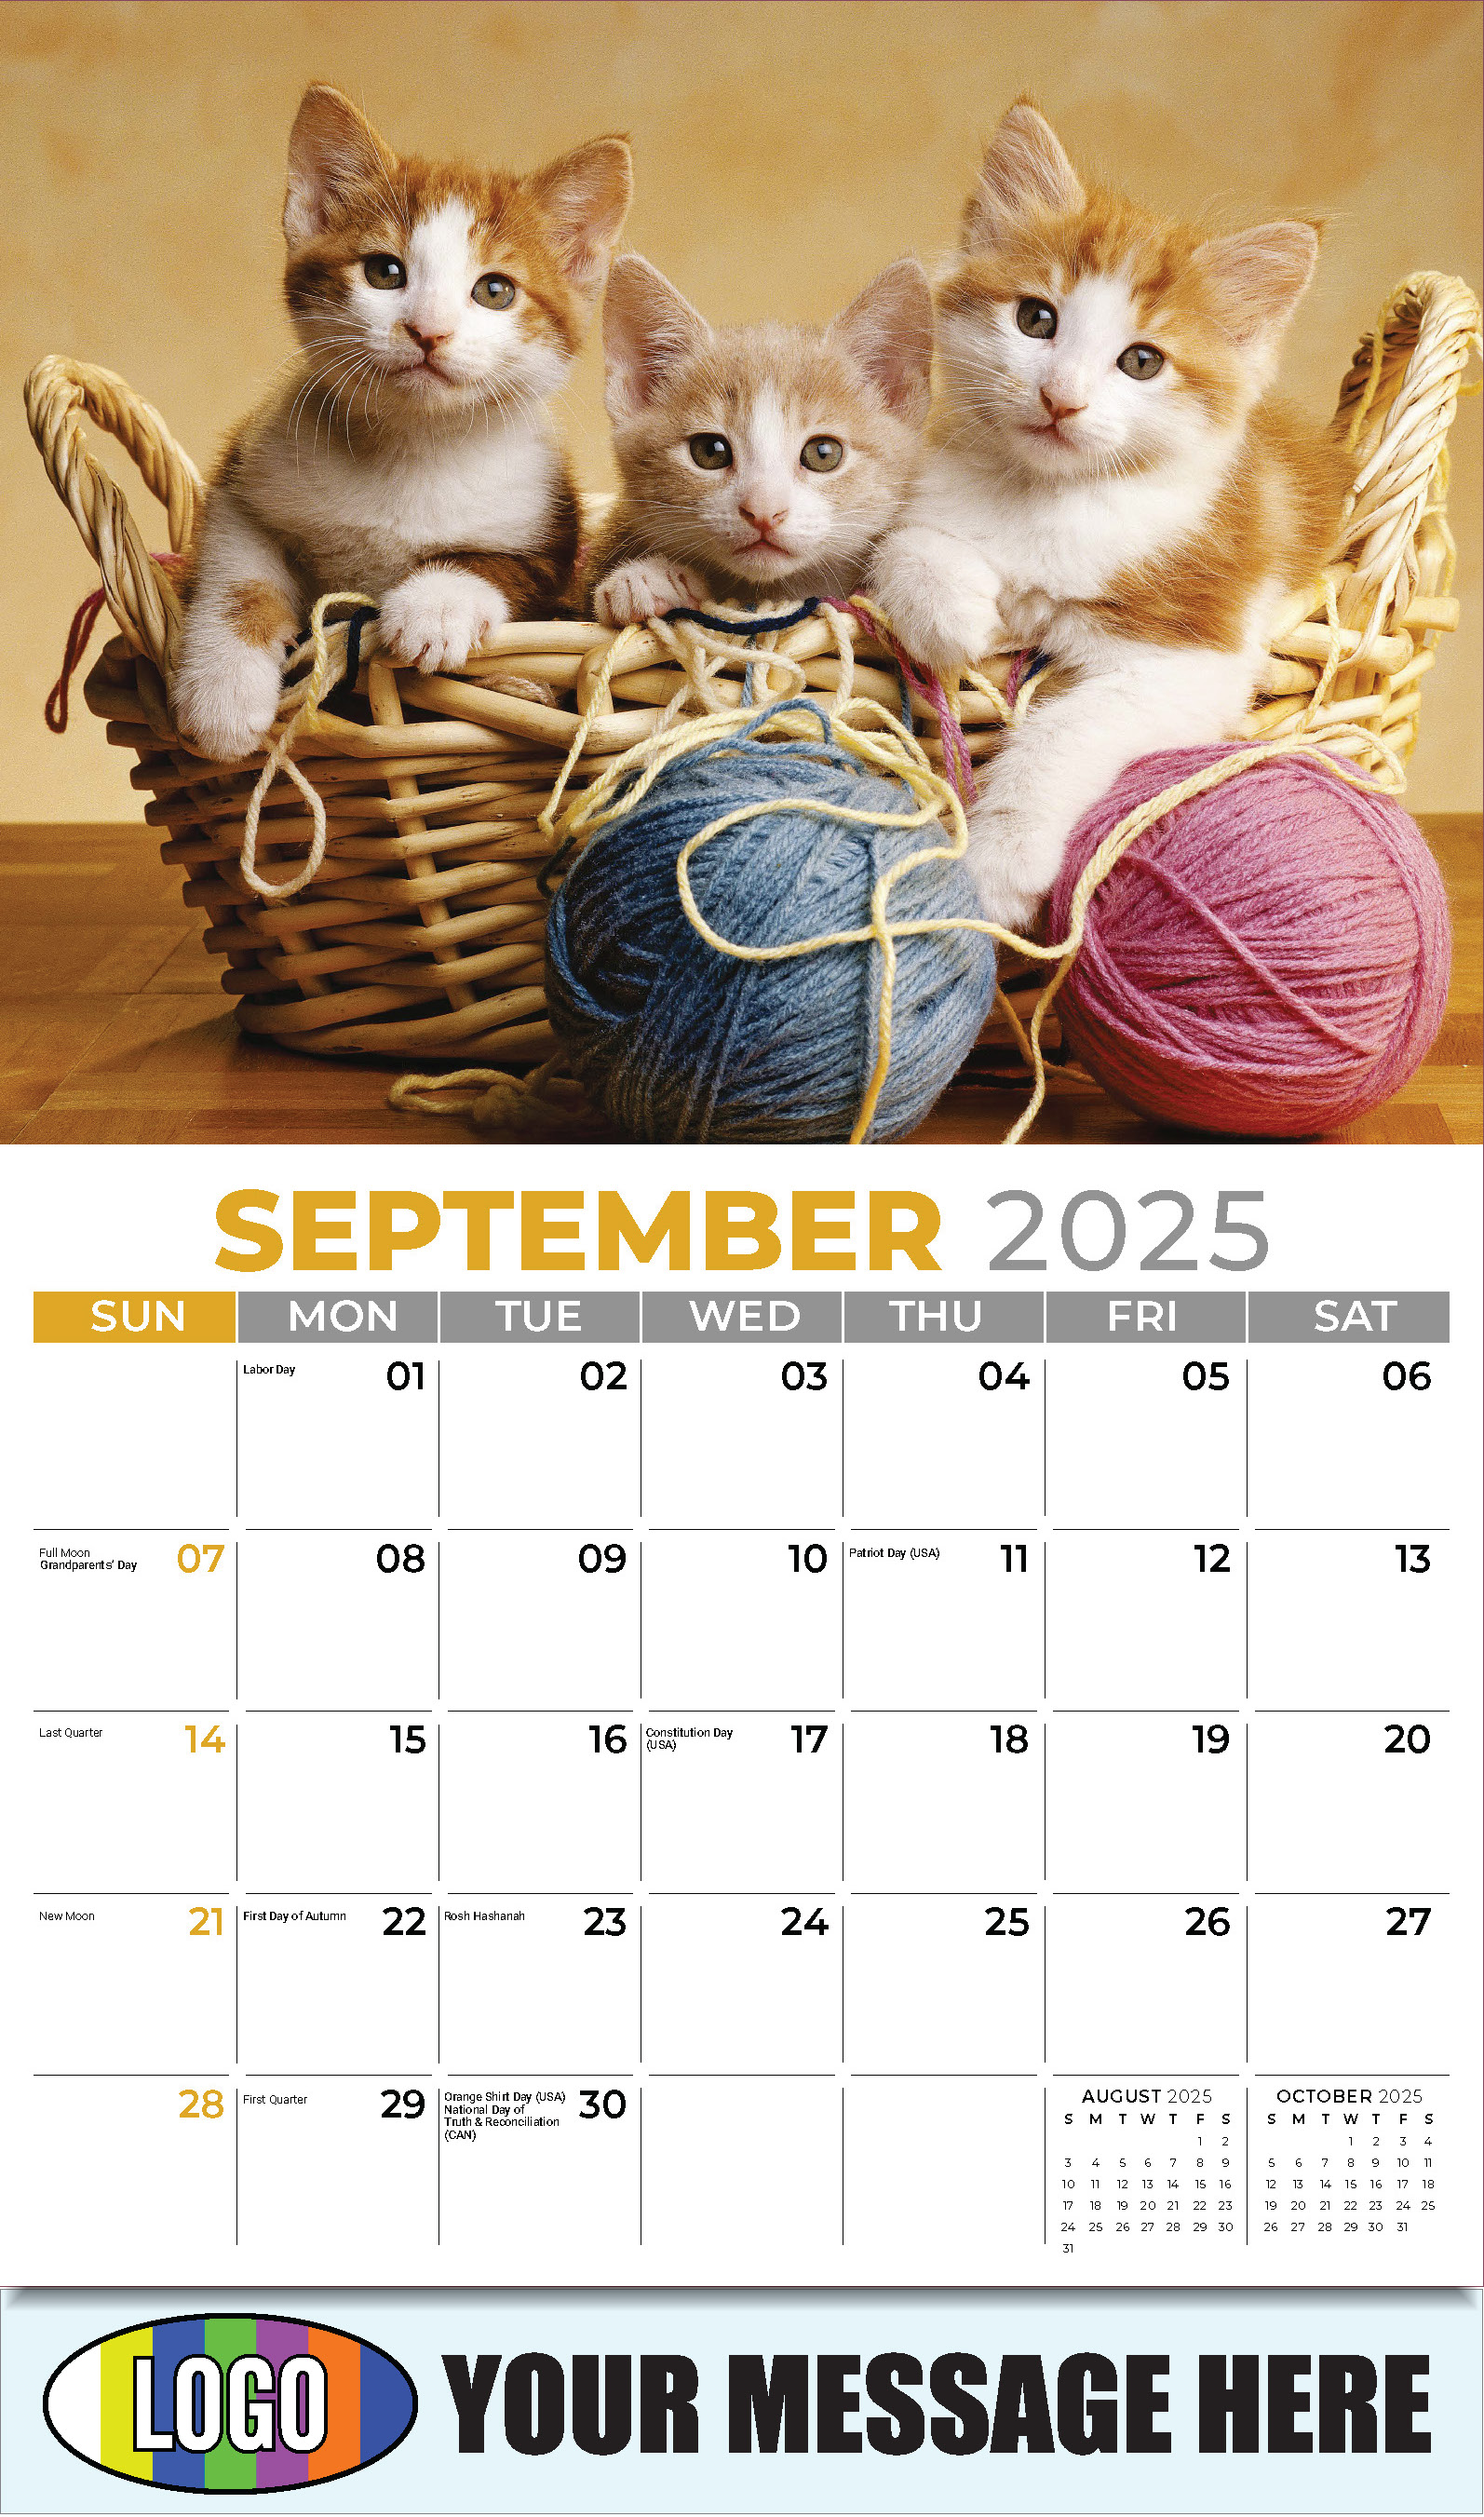 Kittens 2025 Business Promo Wall Calendar - September